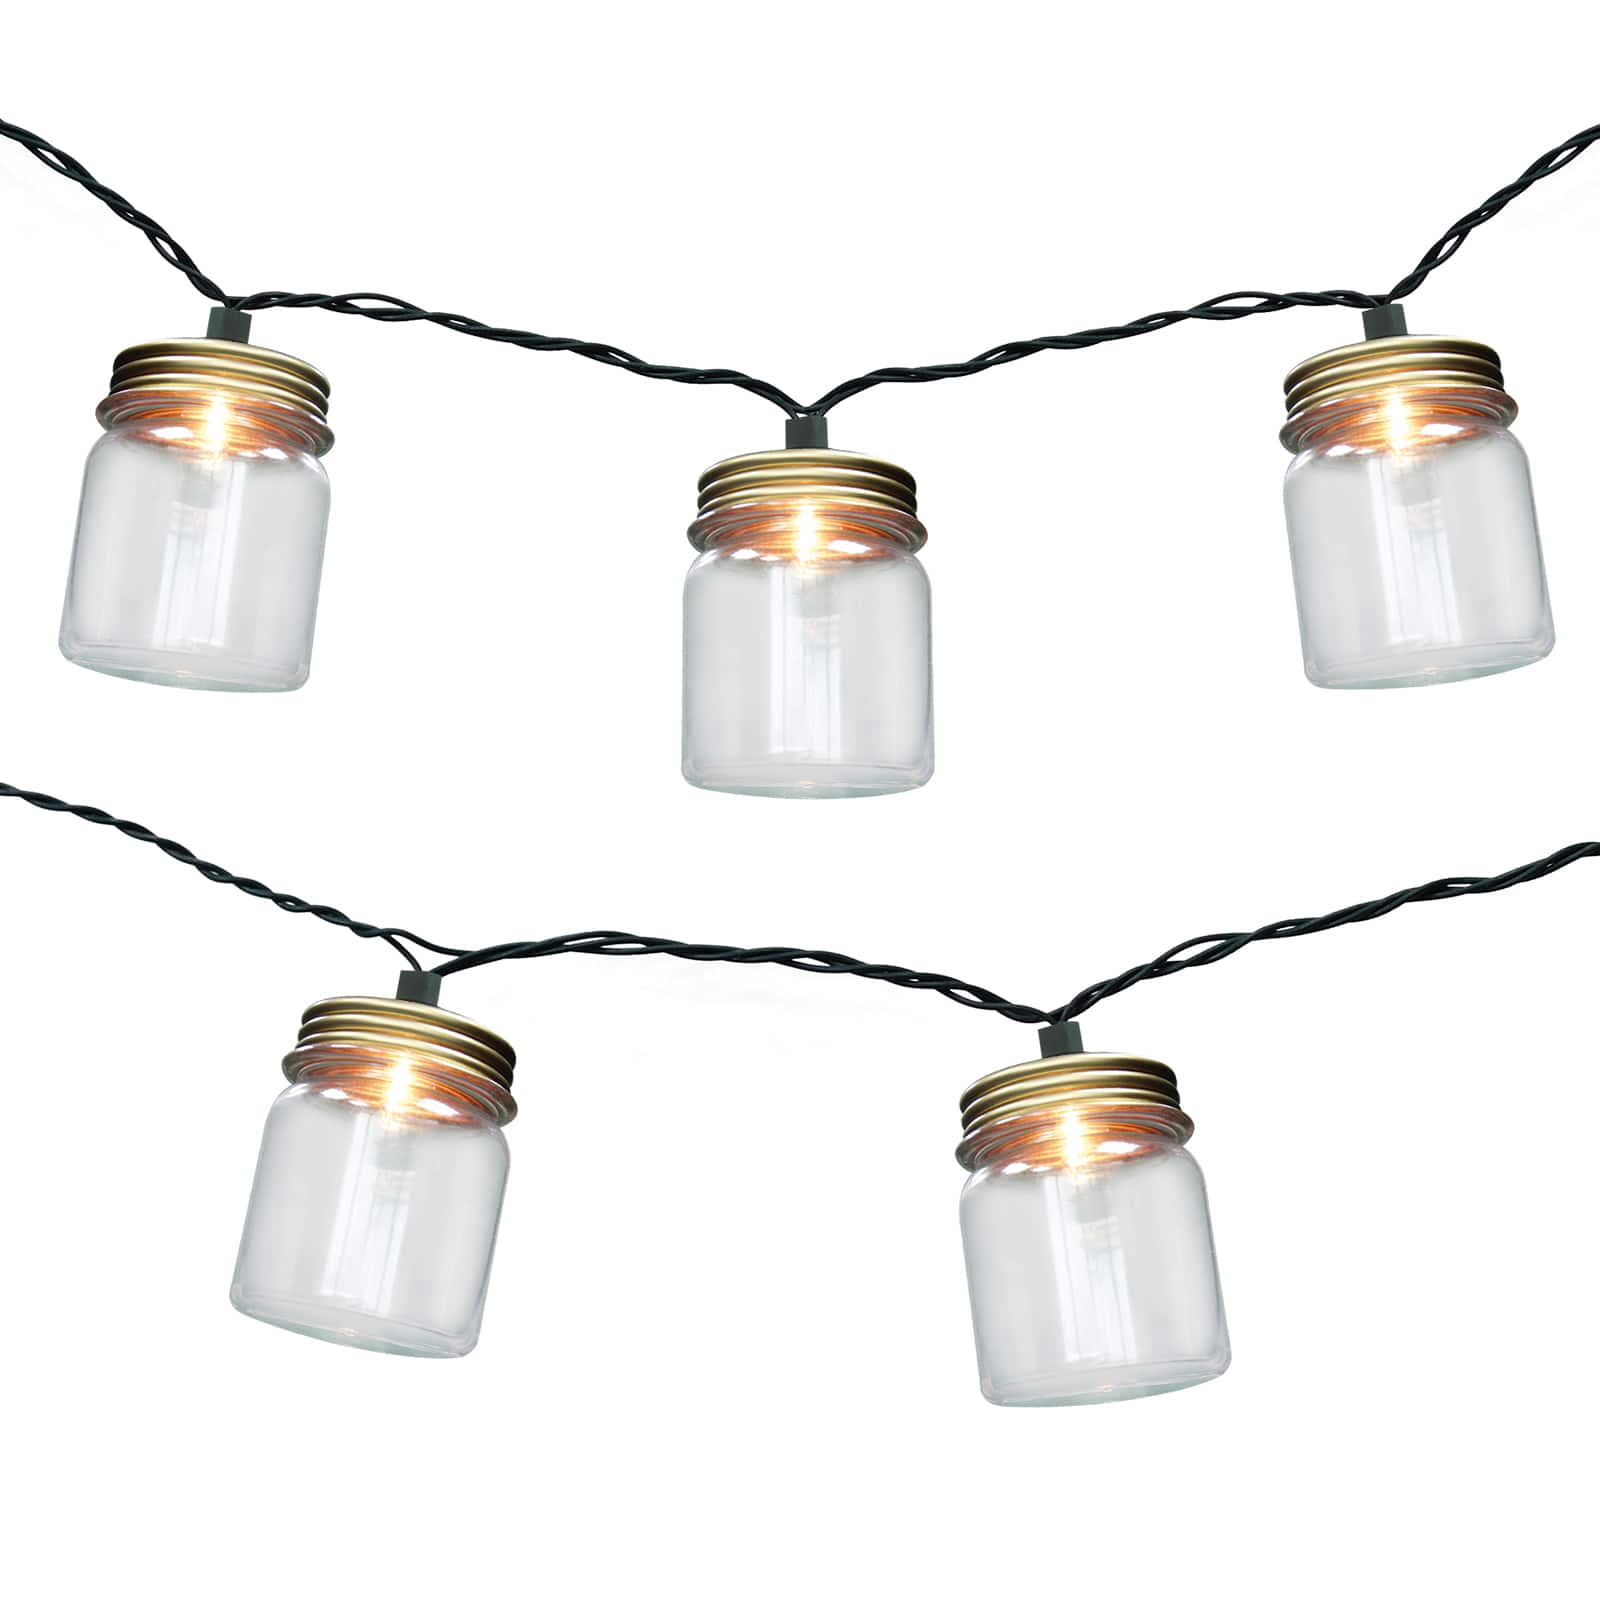 Buy in Bulk - 8 Pack: 10ct. Mason Jar String Lights by Ashland™